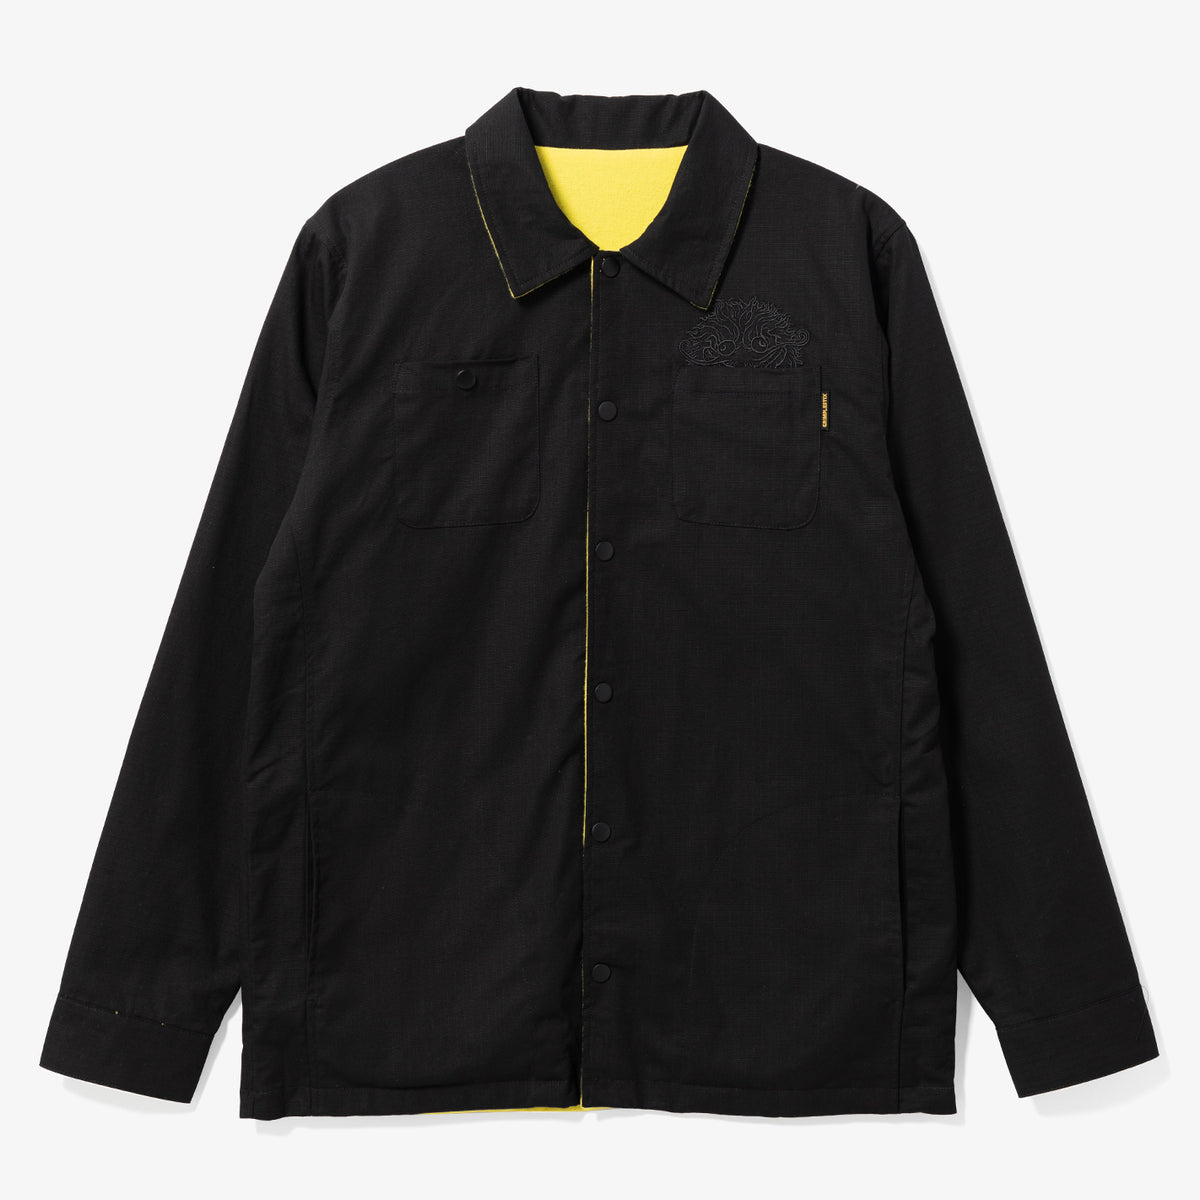 Grimple Jacket (Black/Yellow)